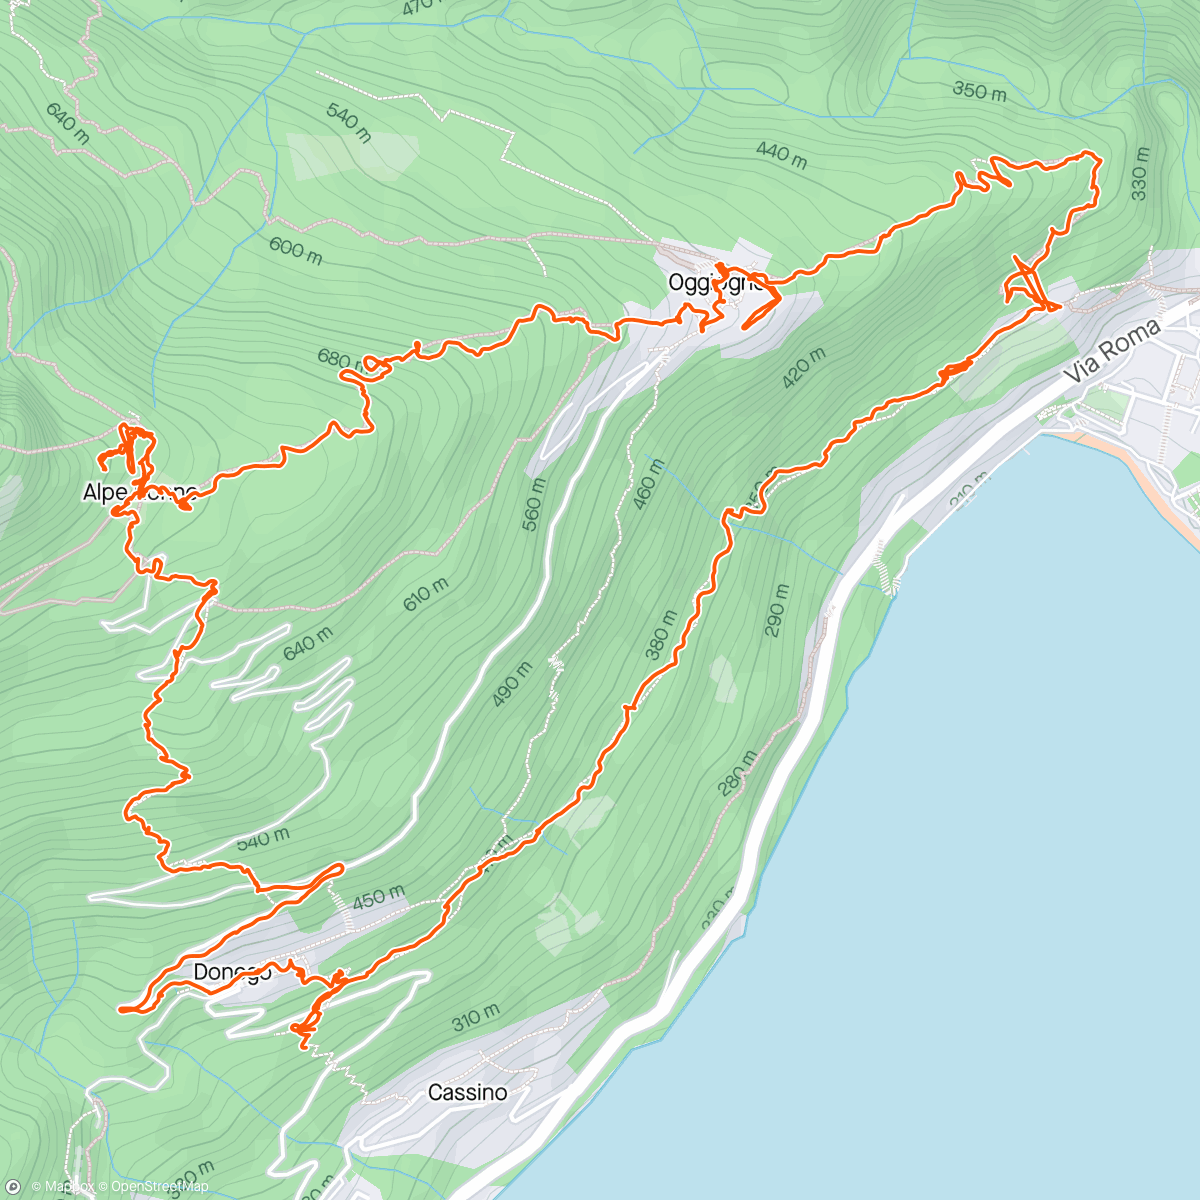 「Wanderung zur Alpe Ronno, mit Michi, Nico und Biggi」活動的地圖